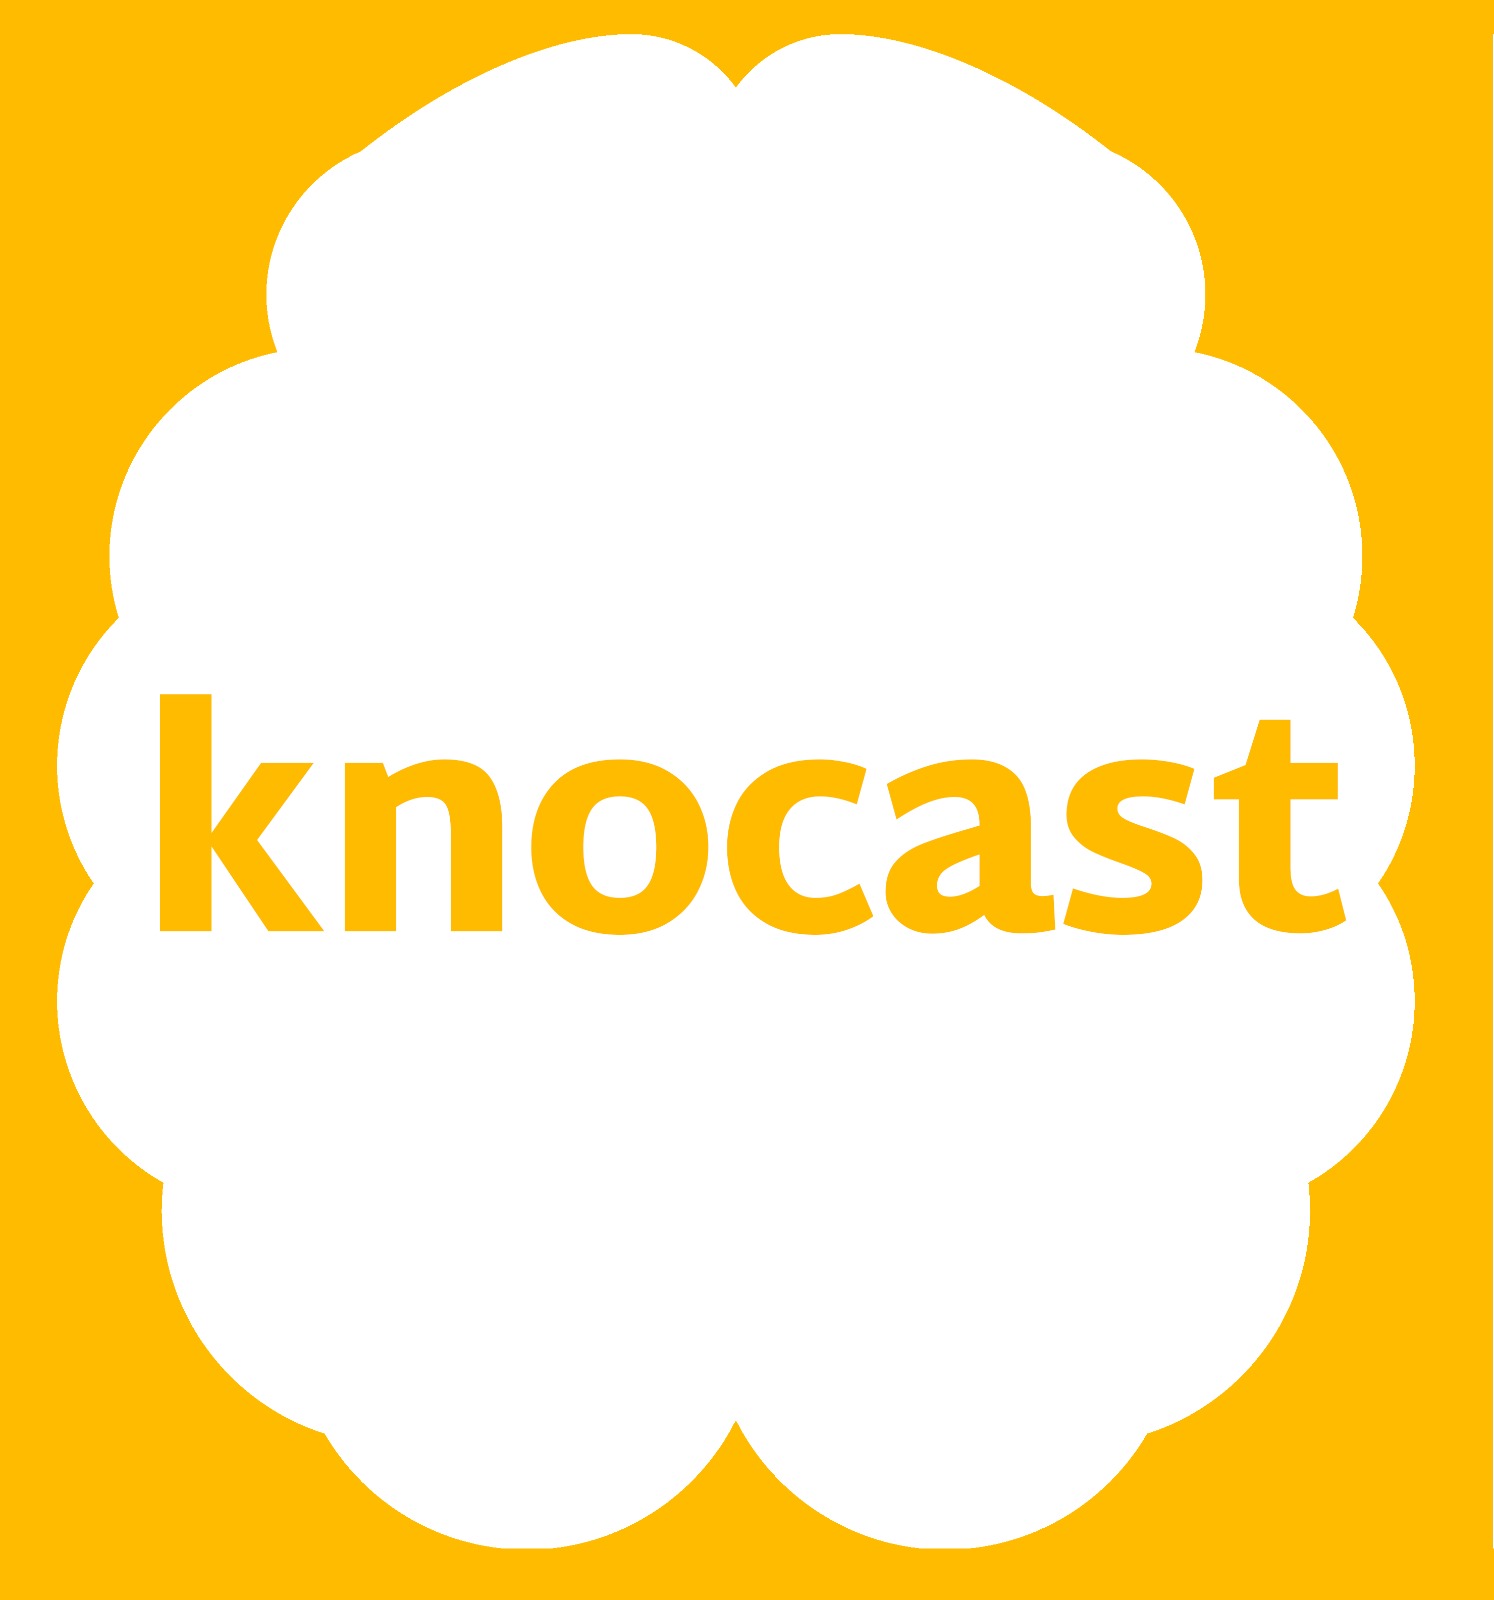 knocast.com by Concept Media Group.